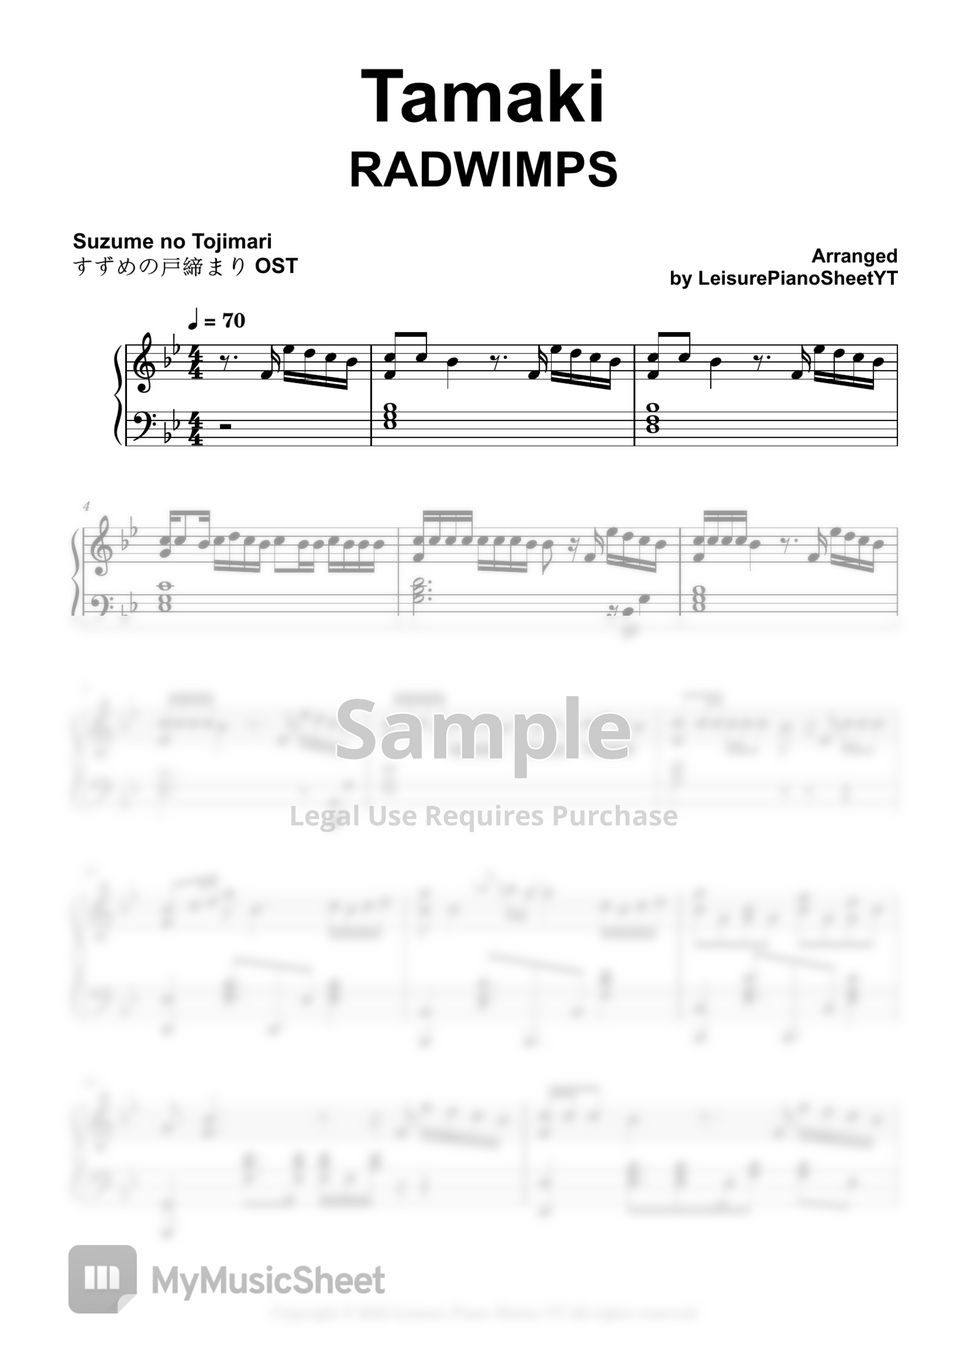 RADWIMPS - Tamaki (すずめの戸締まり OST) by Leisure Piano Sheets YT